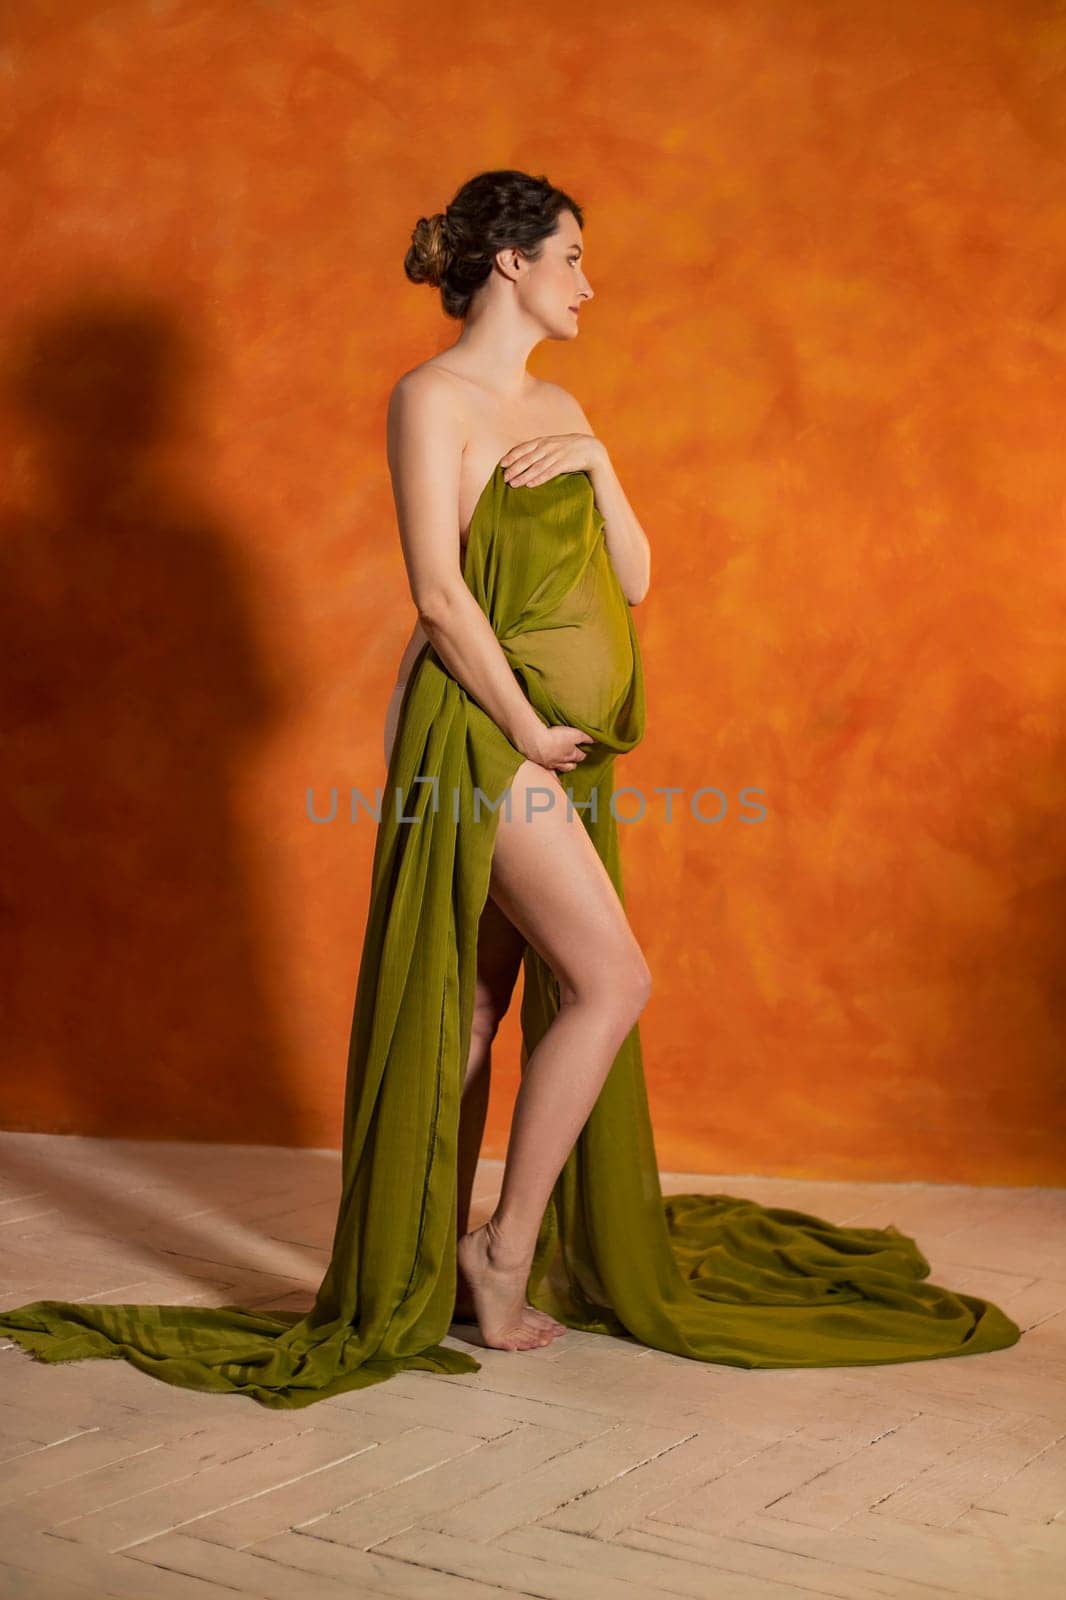 Pregnant woman on orange background by zokov